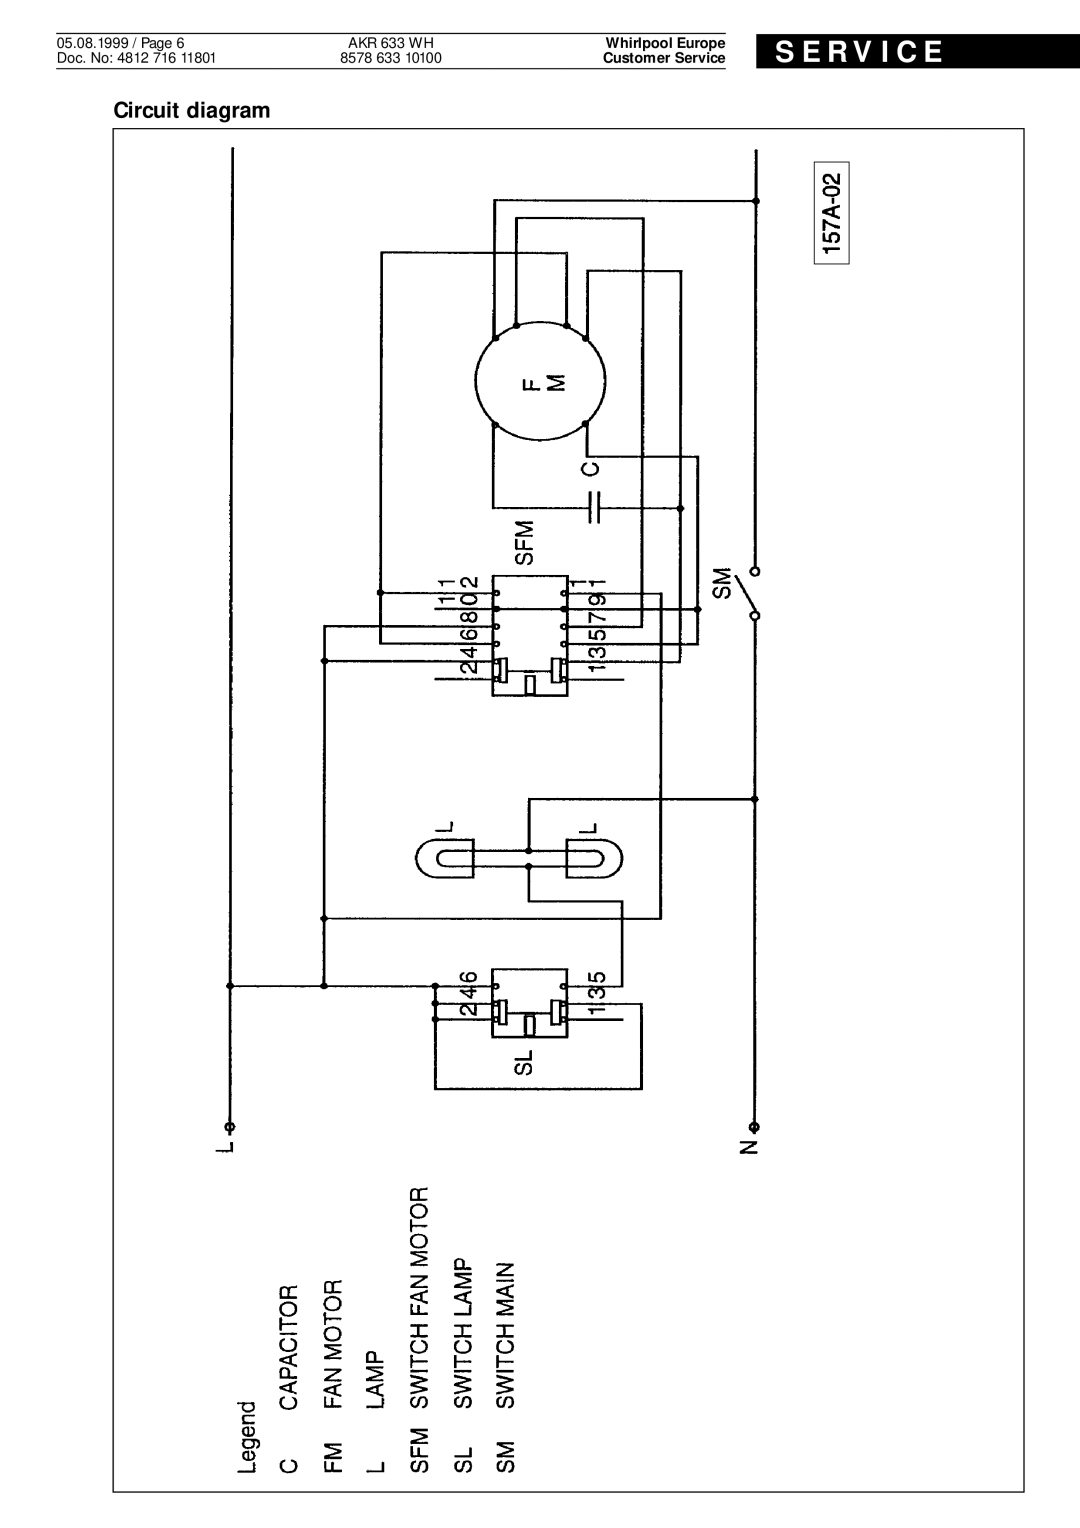 Whirlpool AKR 633 WH service manual Circuit diagram, S E R V I C E, Whirlpool Europe, Customer Service 